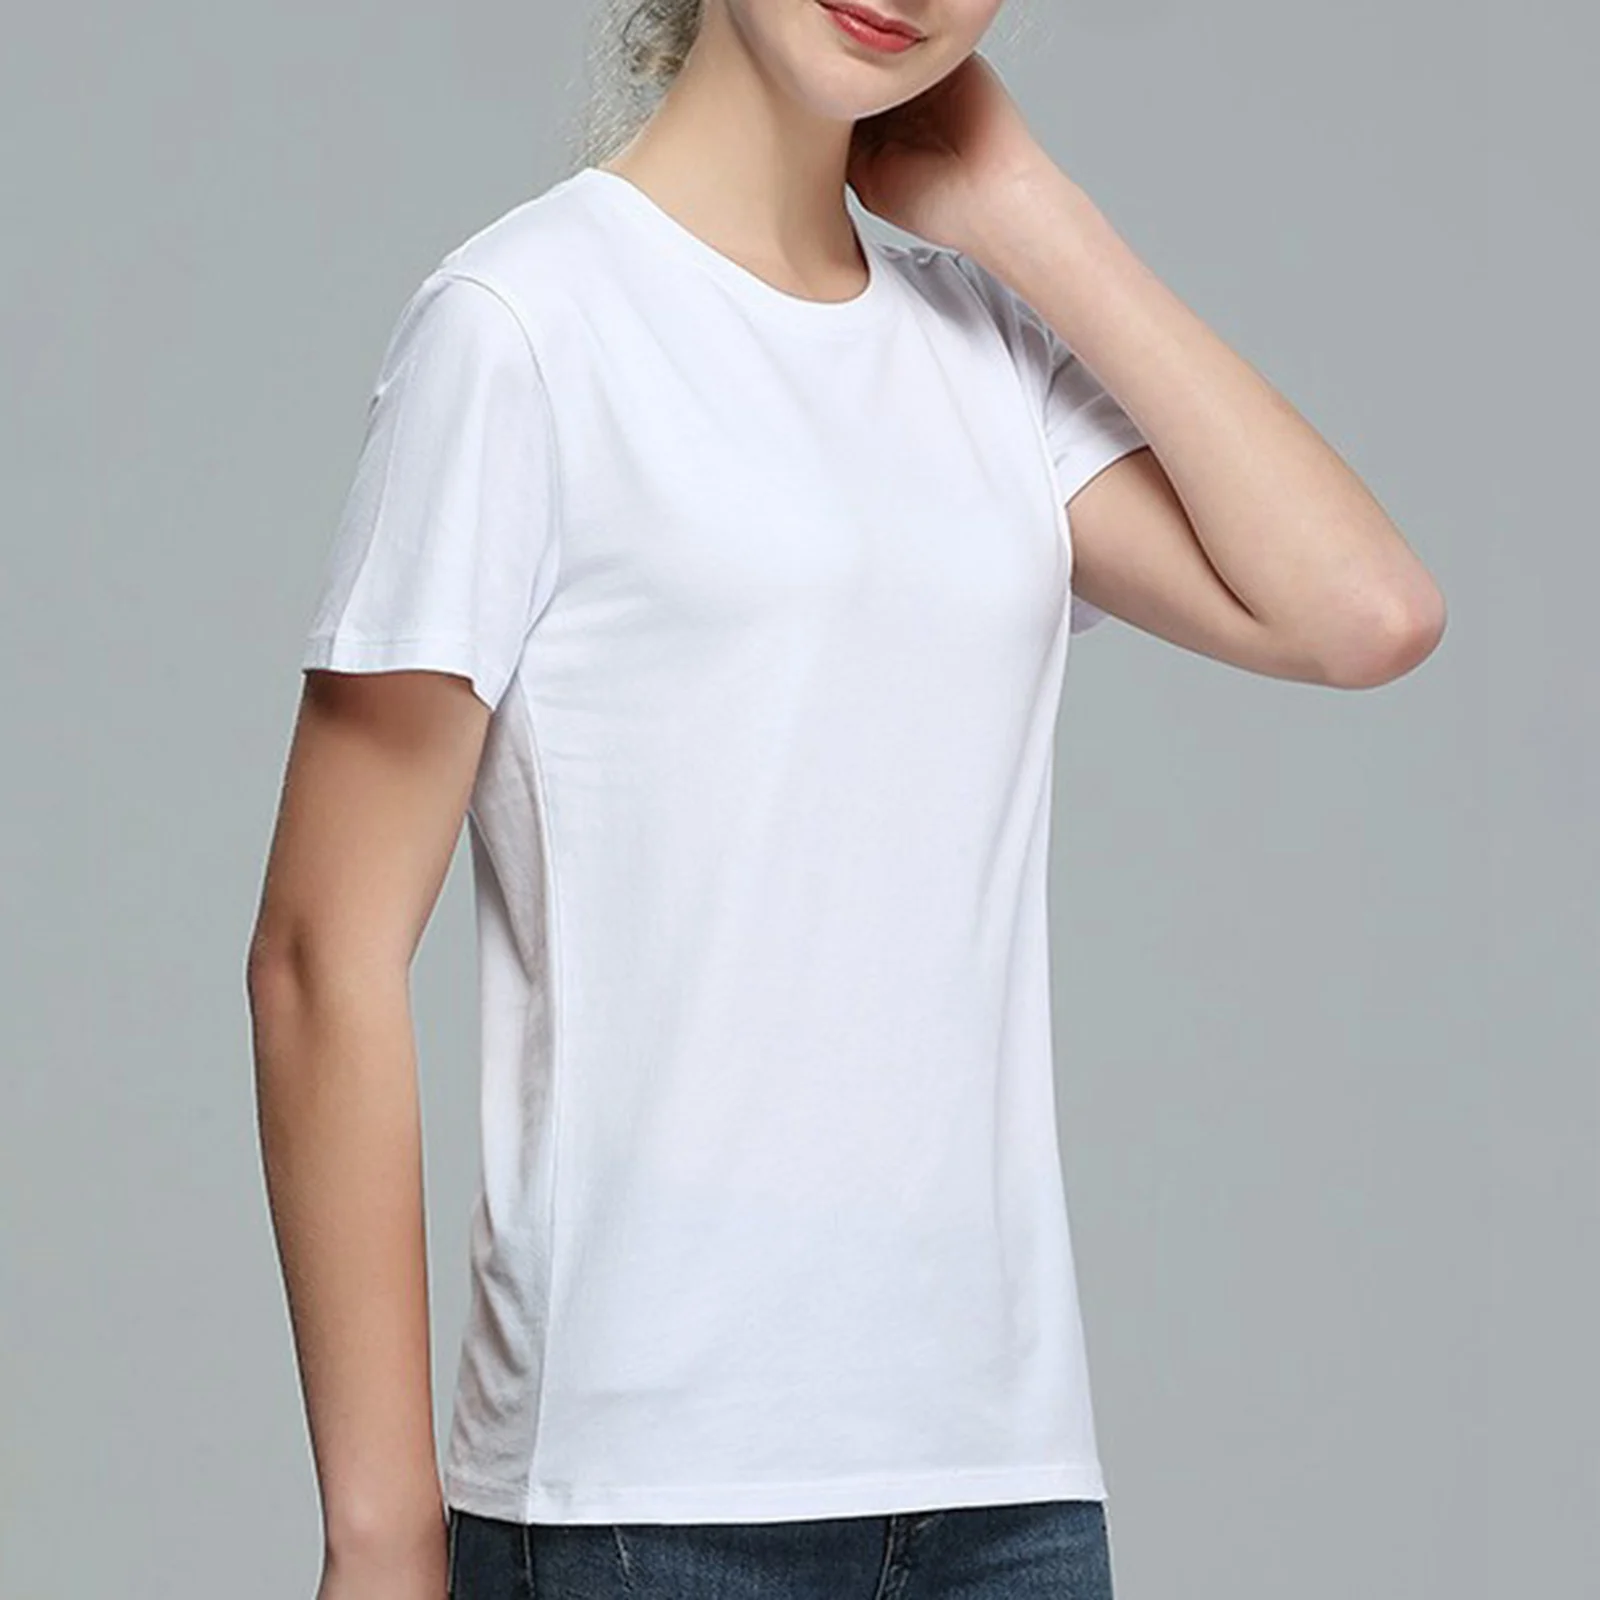 Man Summer Soft T shirts Unisex Women Short Sleeve Modal T-shirt white Basic Casual Tee Shirt Tops Crewneck